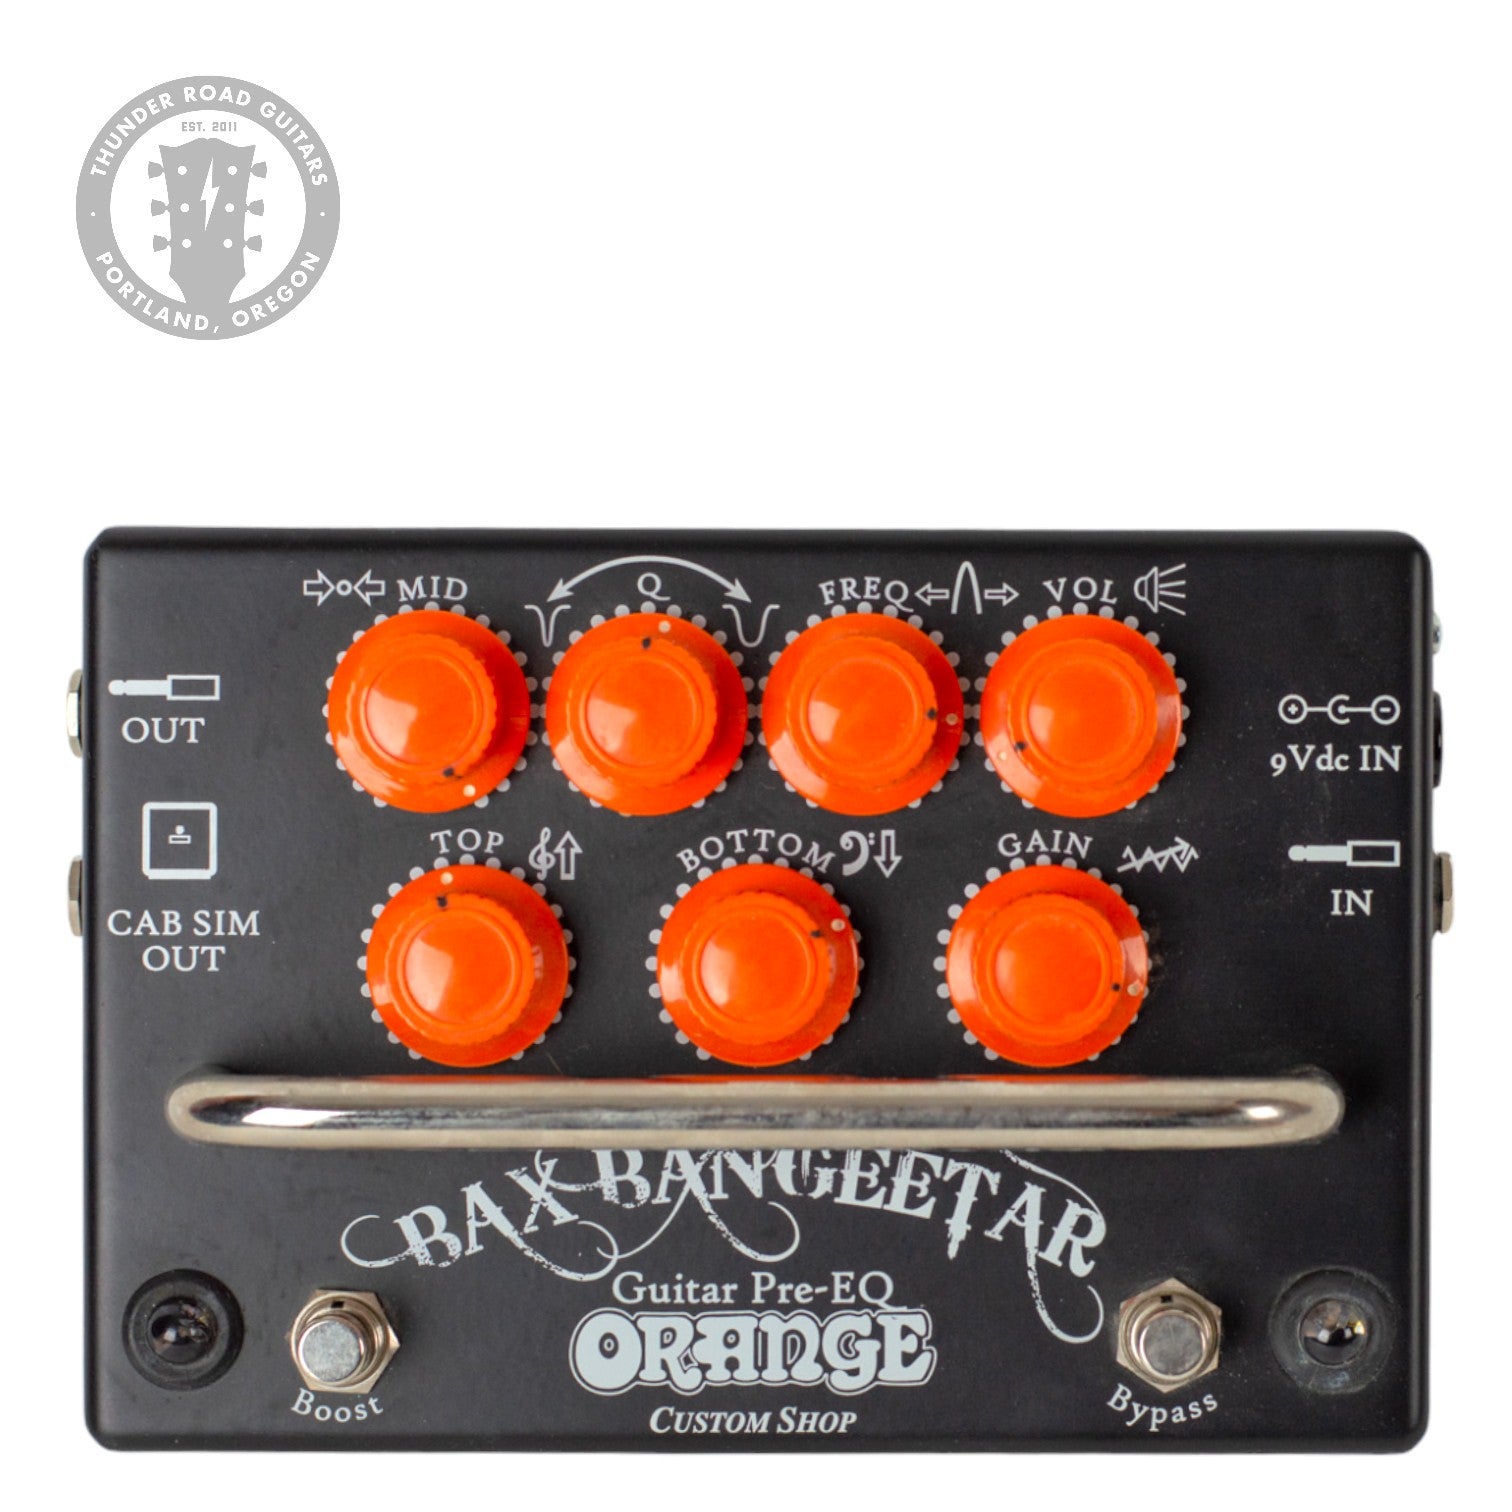 Thunder Road Guitars - Used Orange Custom Shop Bax Bangeetar